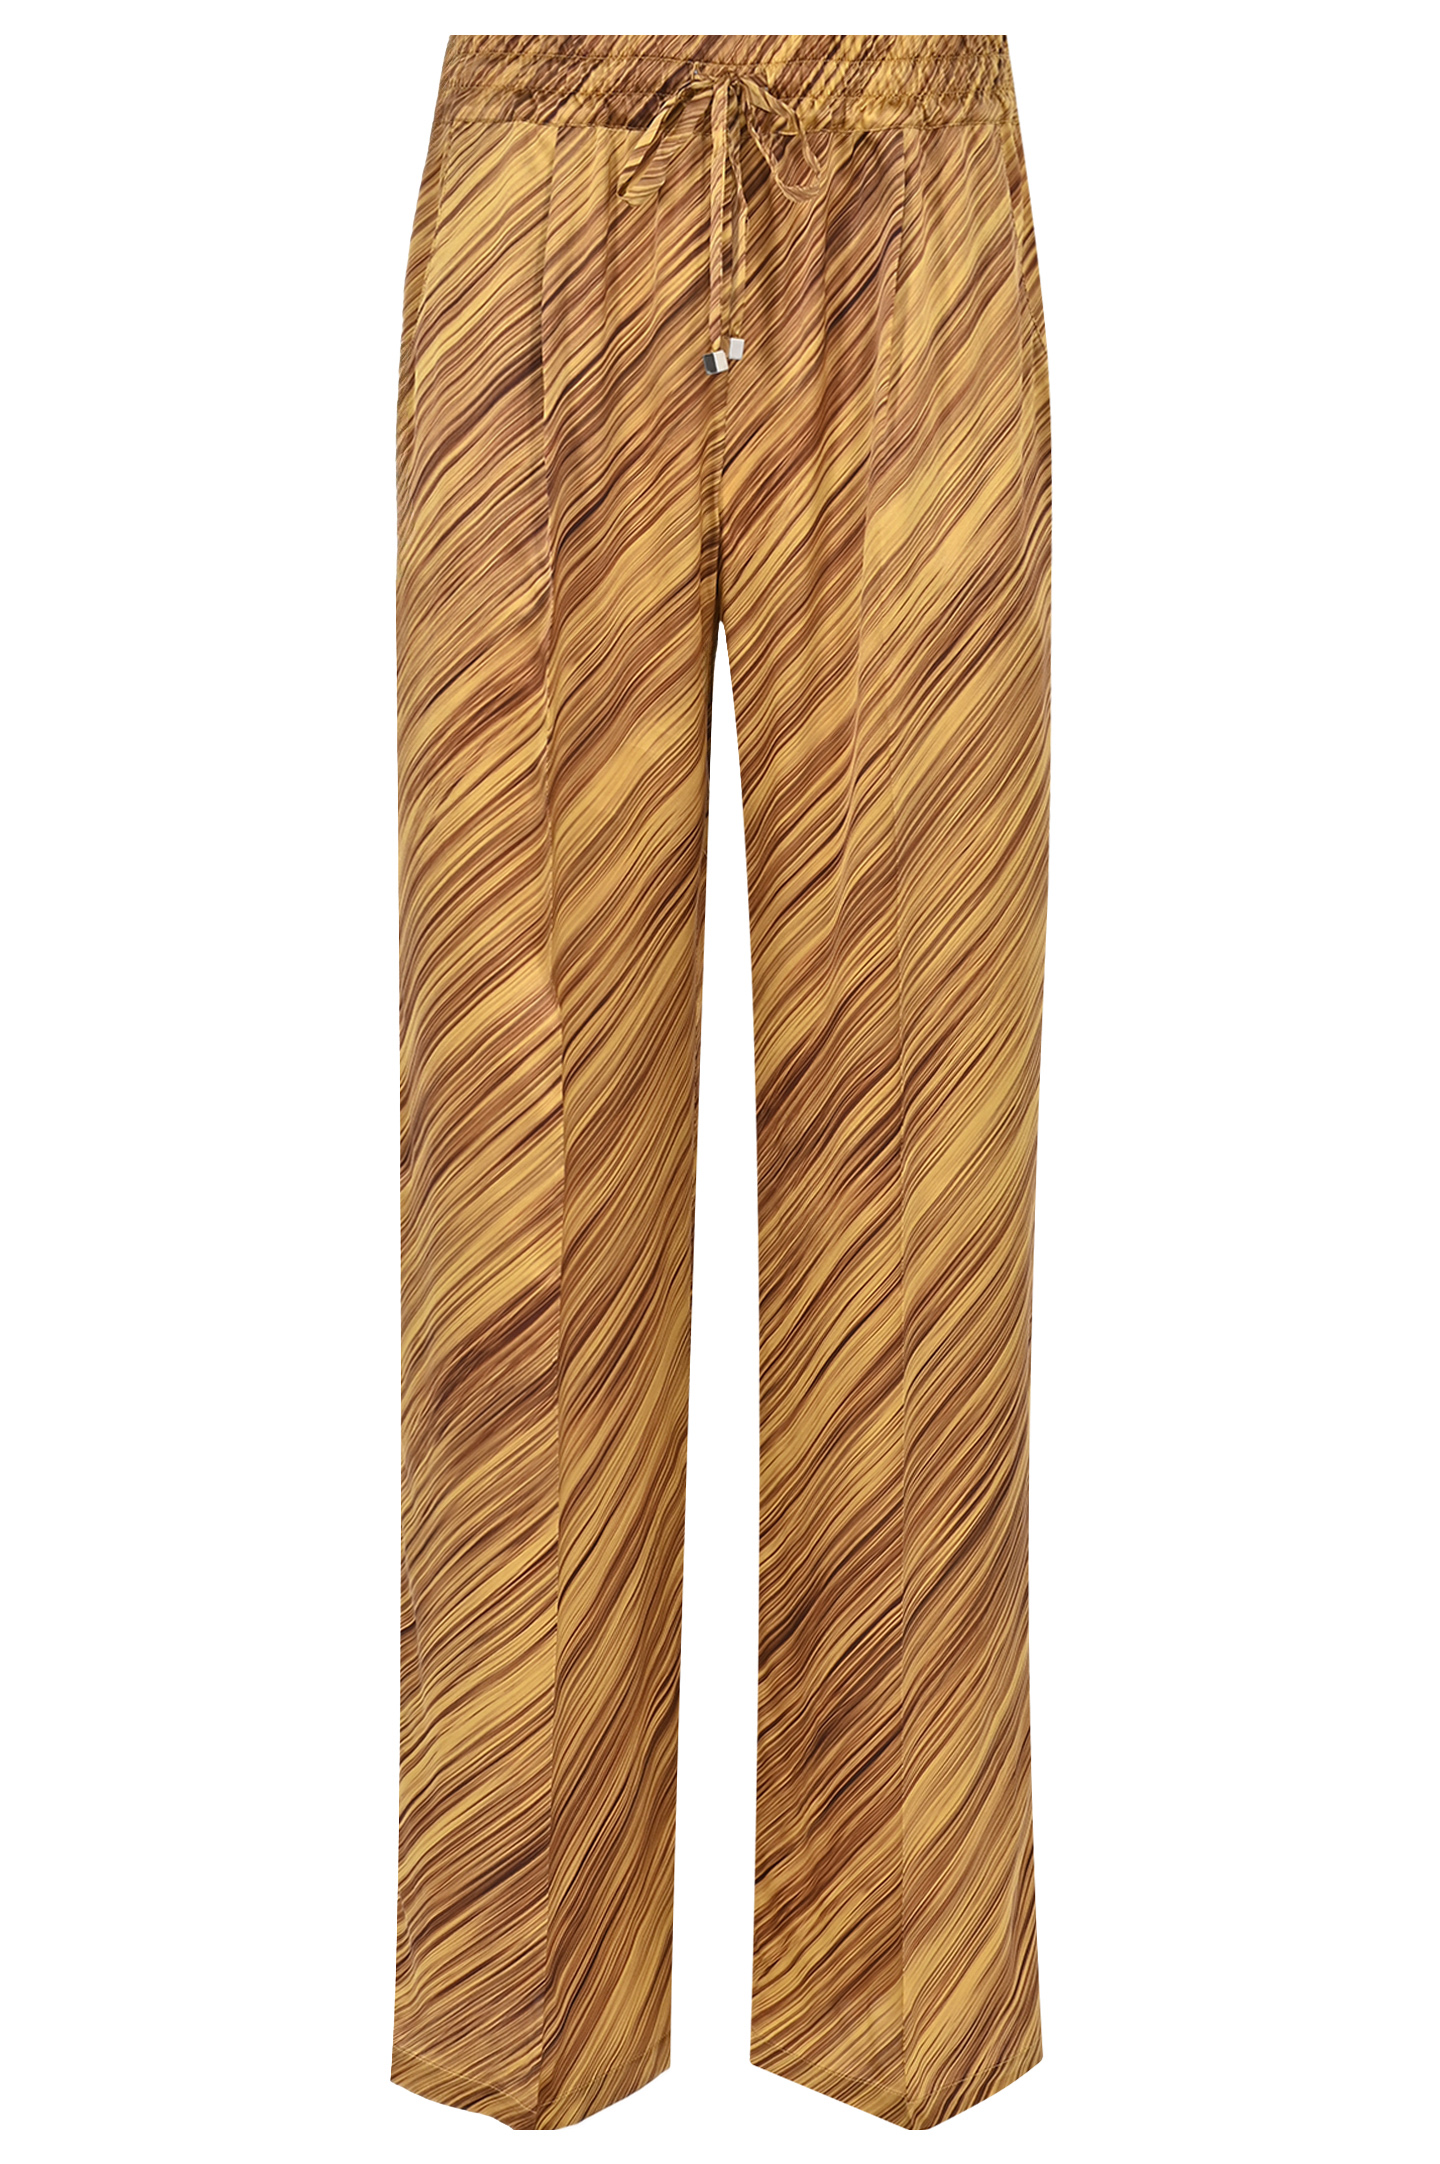 Широкие брюки из шелка со стрелками KITON D48122K0978C0, цвет: Желтый, Женский